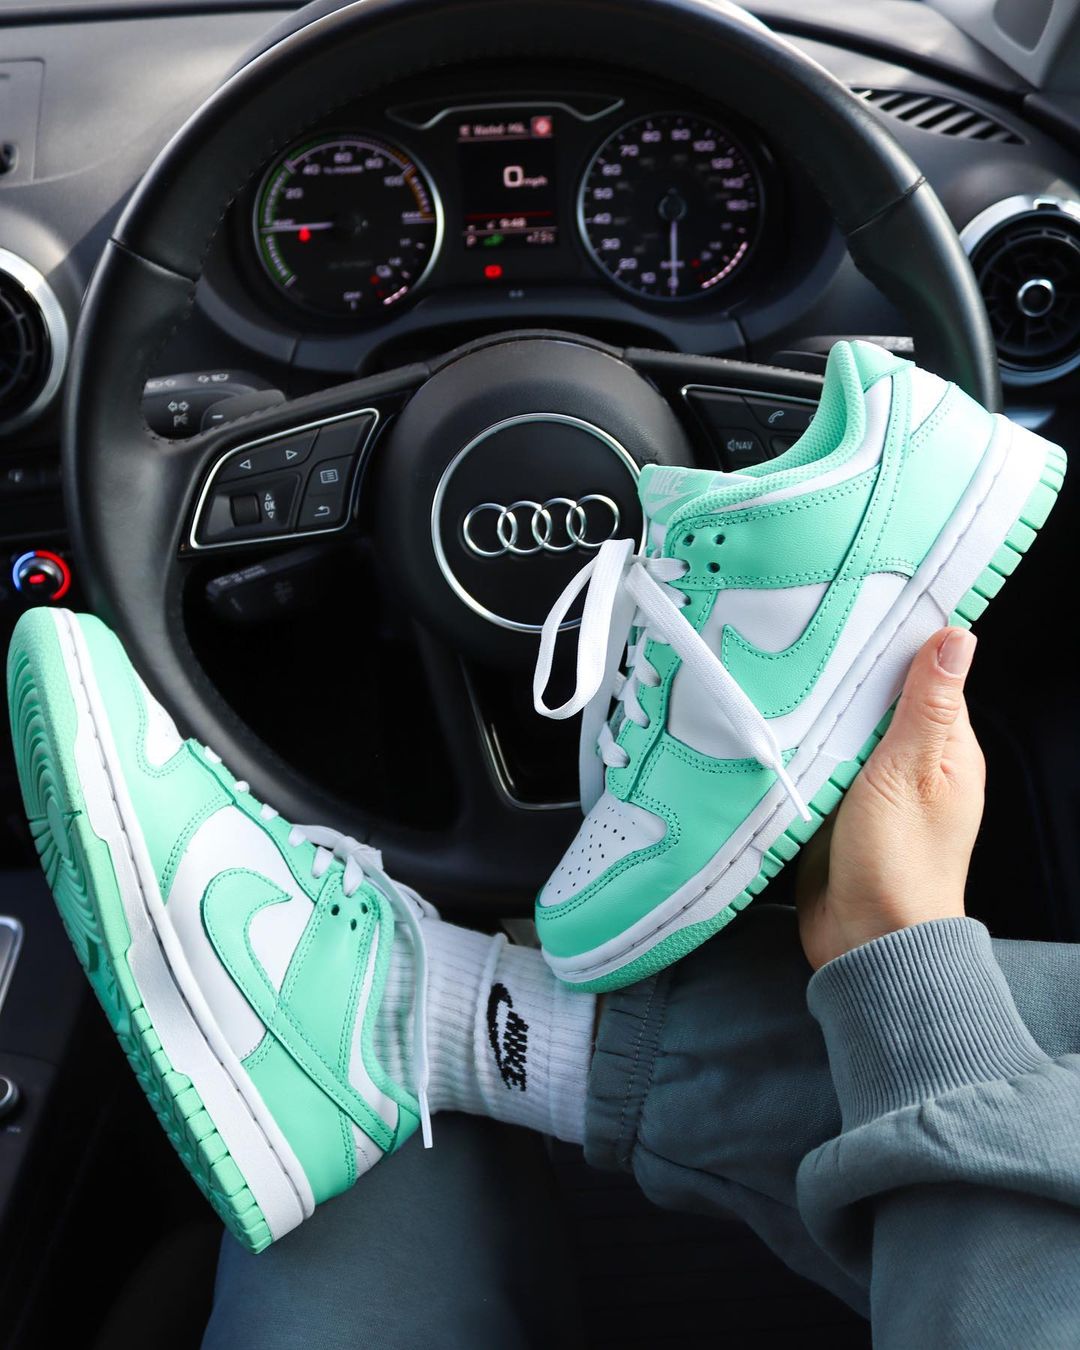 First Copy Nike SB Dunk Low “Green Glow”